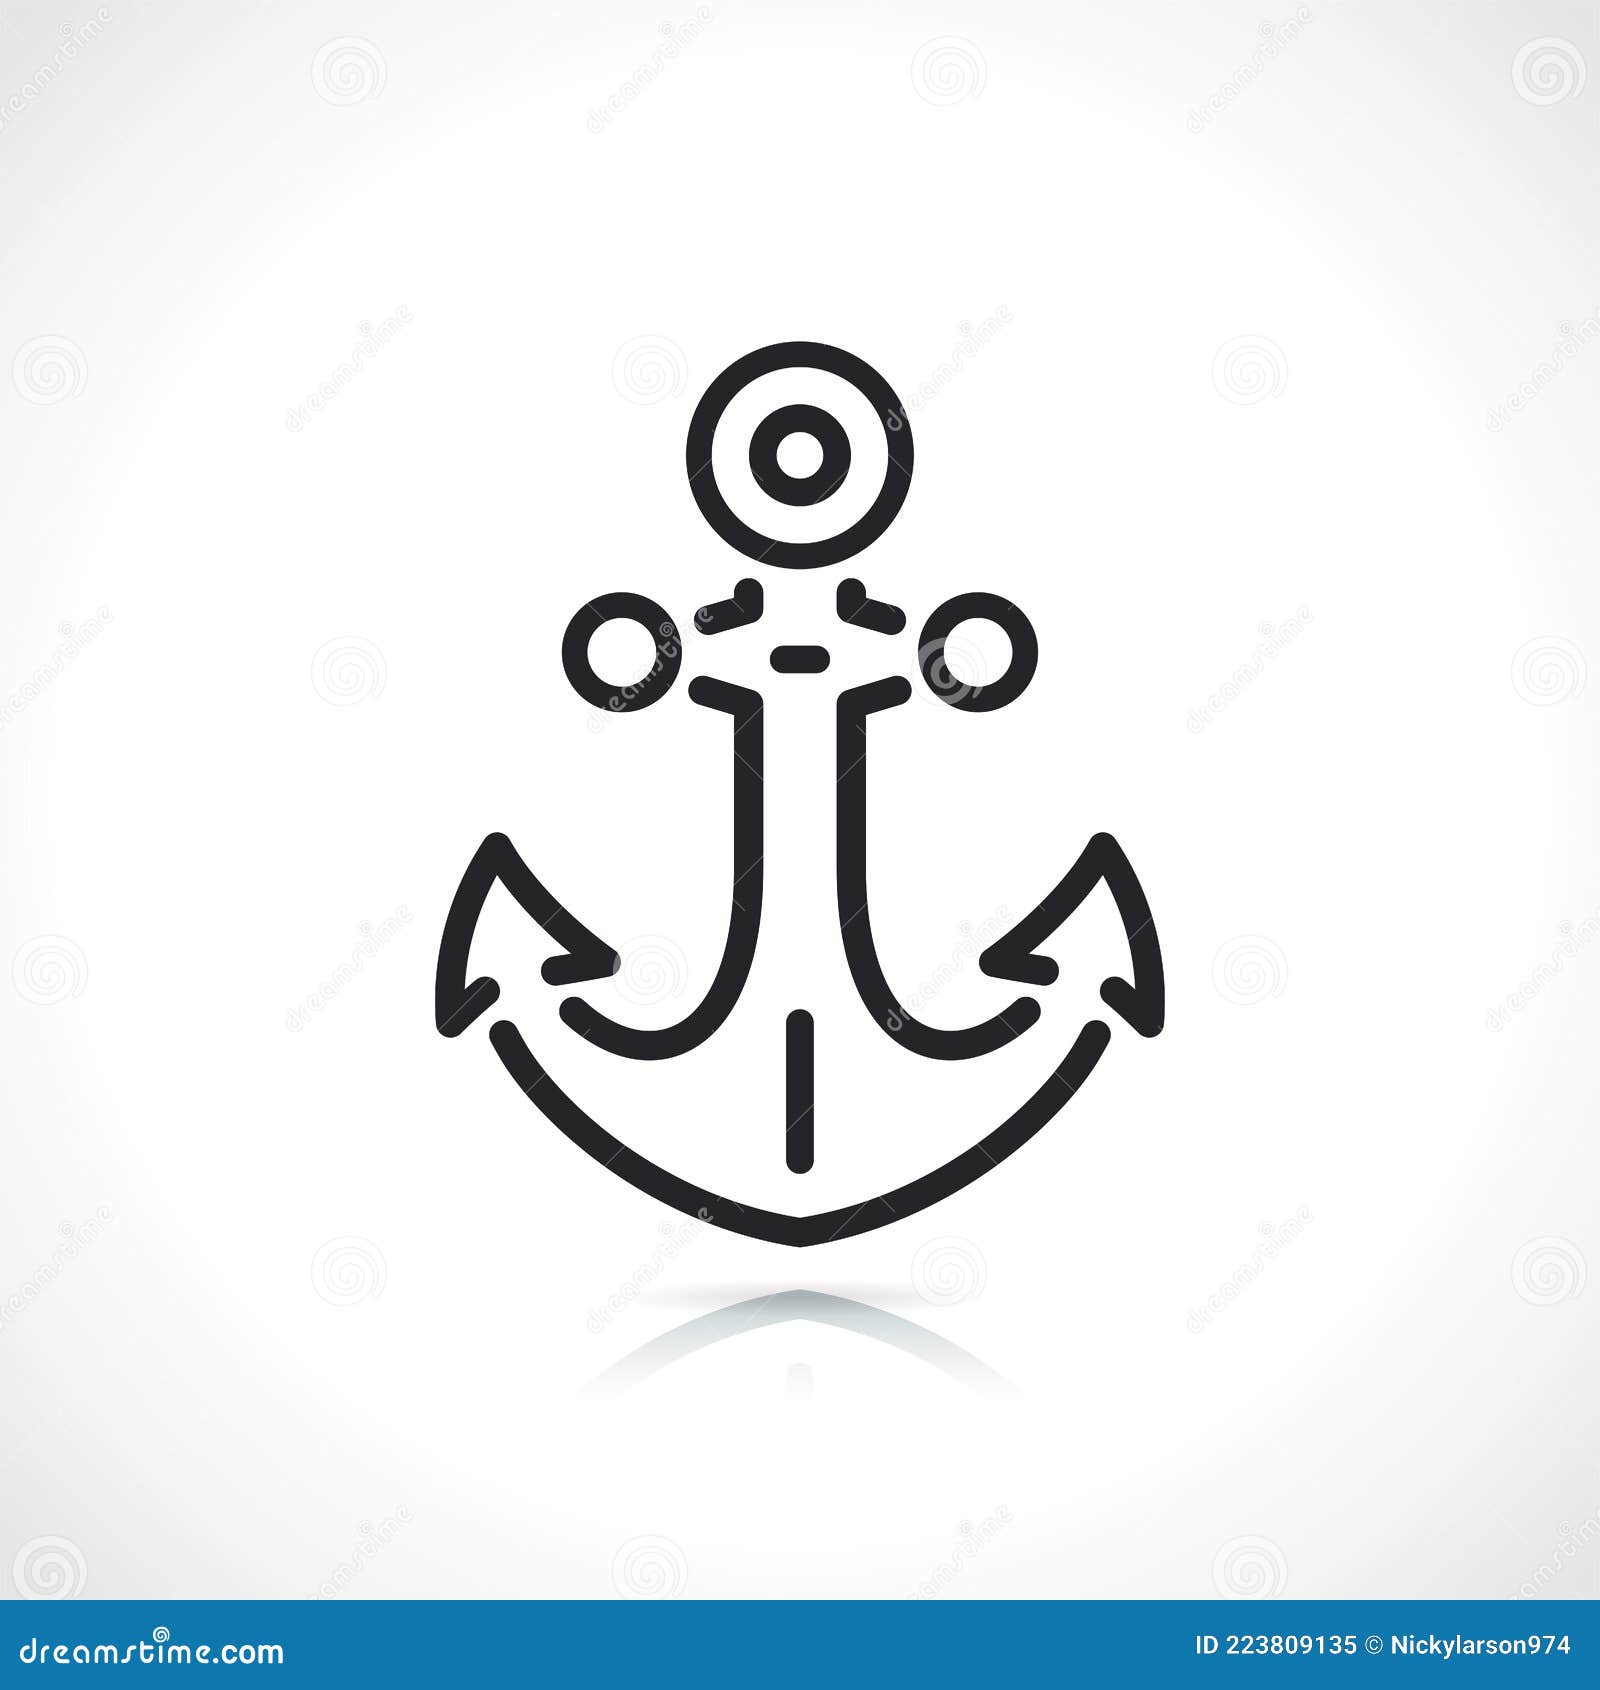 Boat anchor thin line icon stock vector. Illustration of marine - 223809135